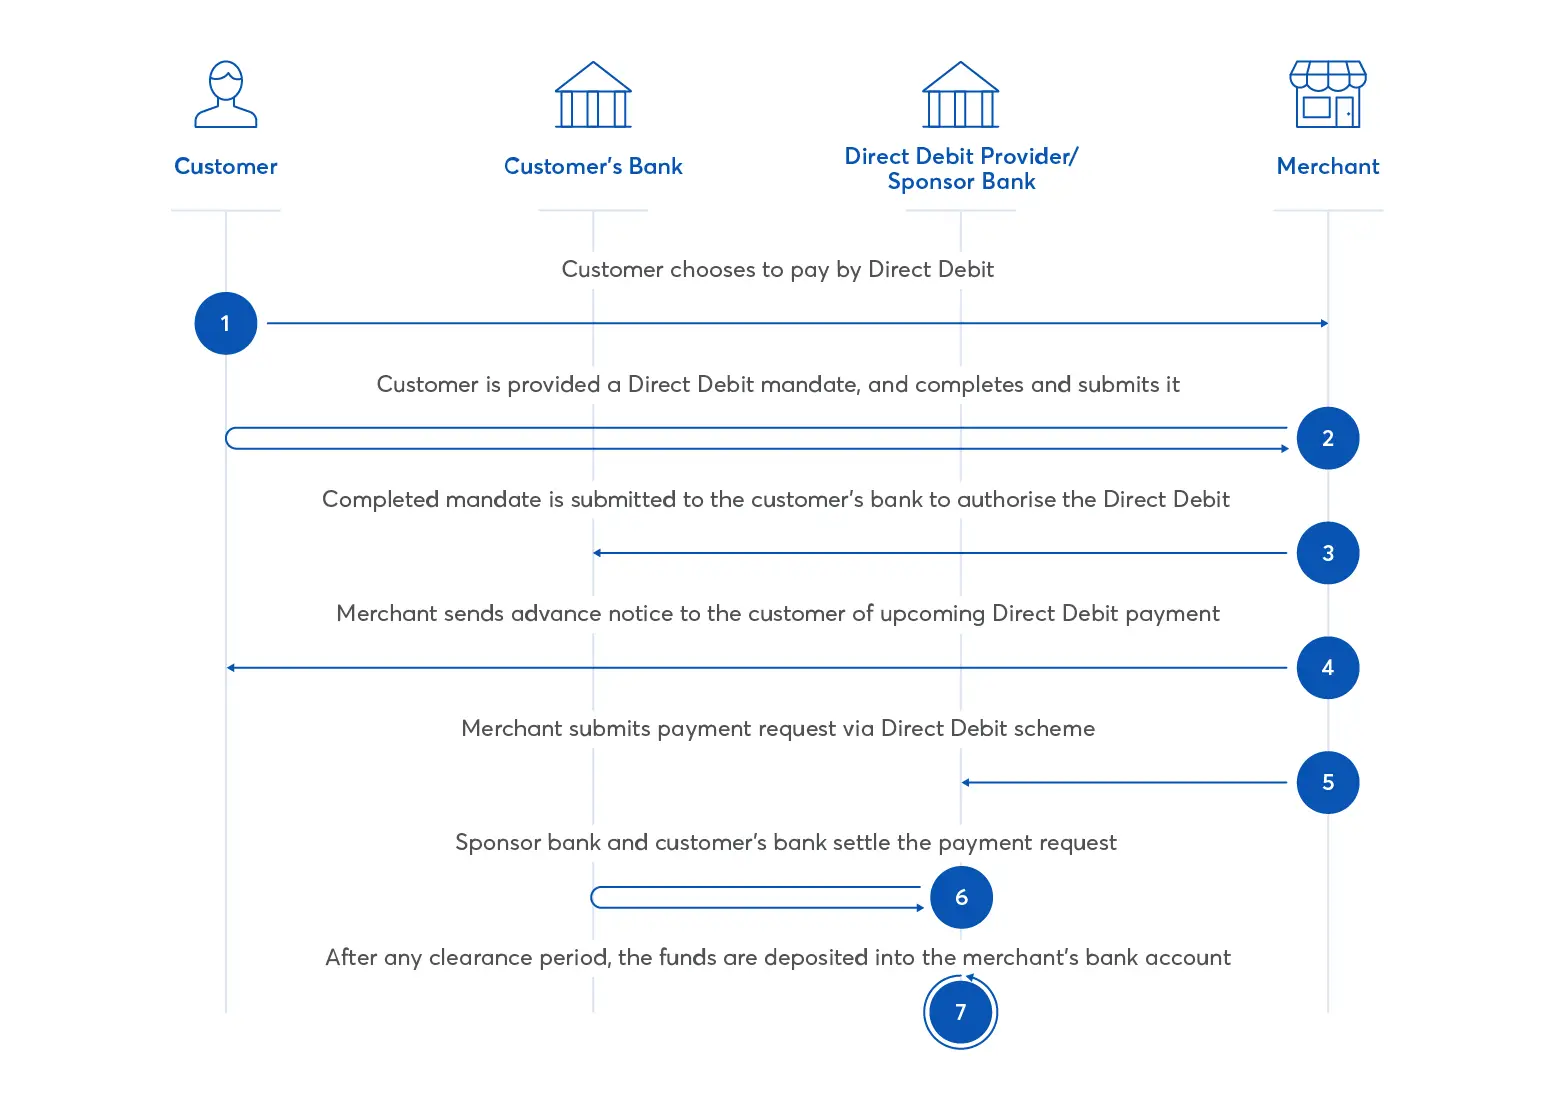 Direct Debit operation process chart flow